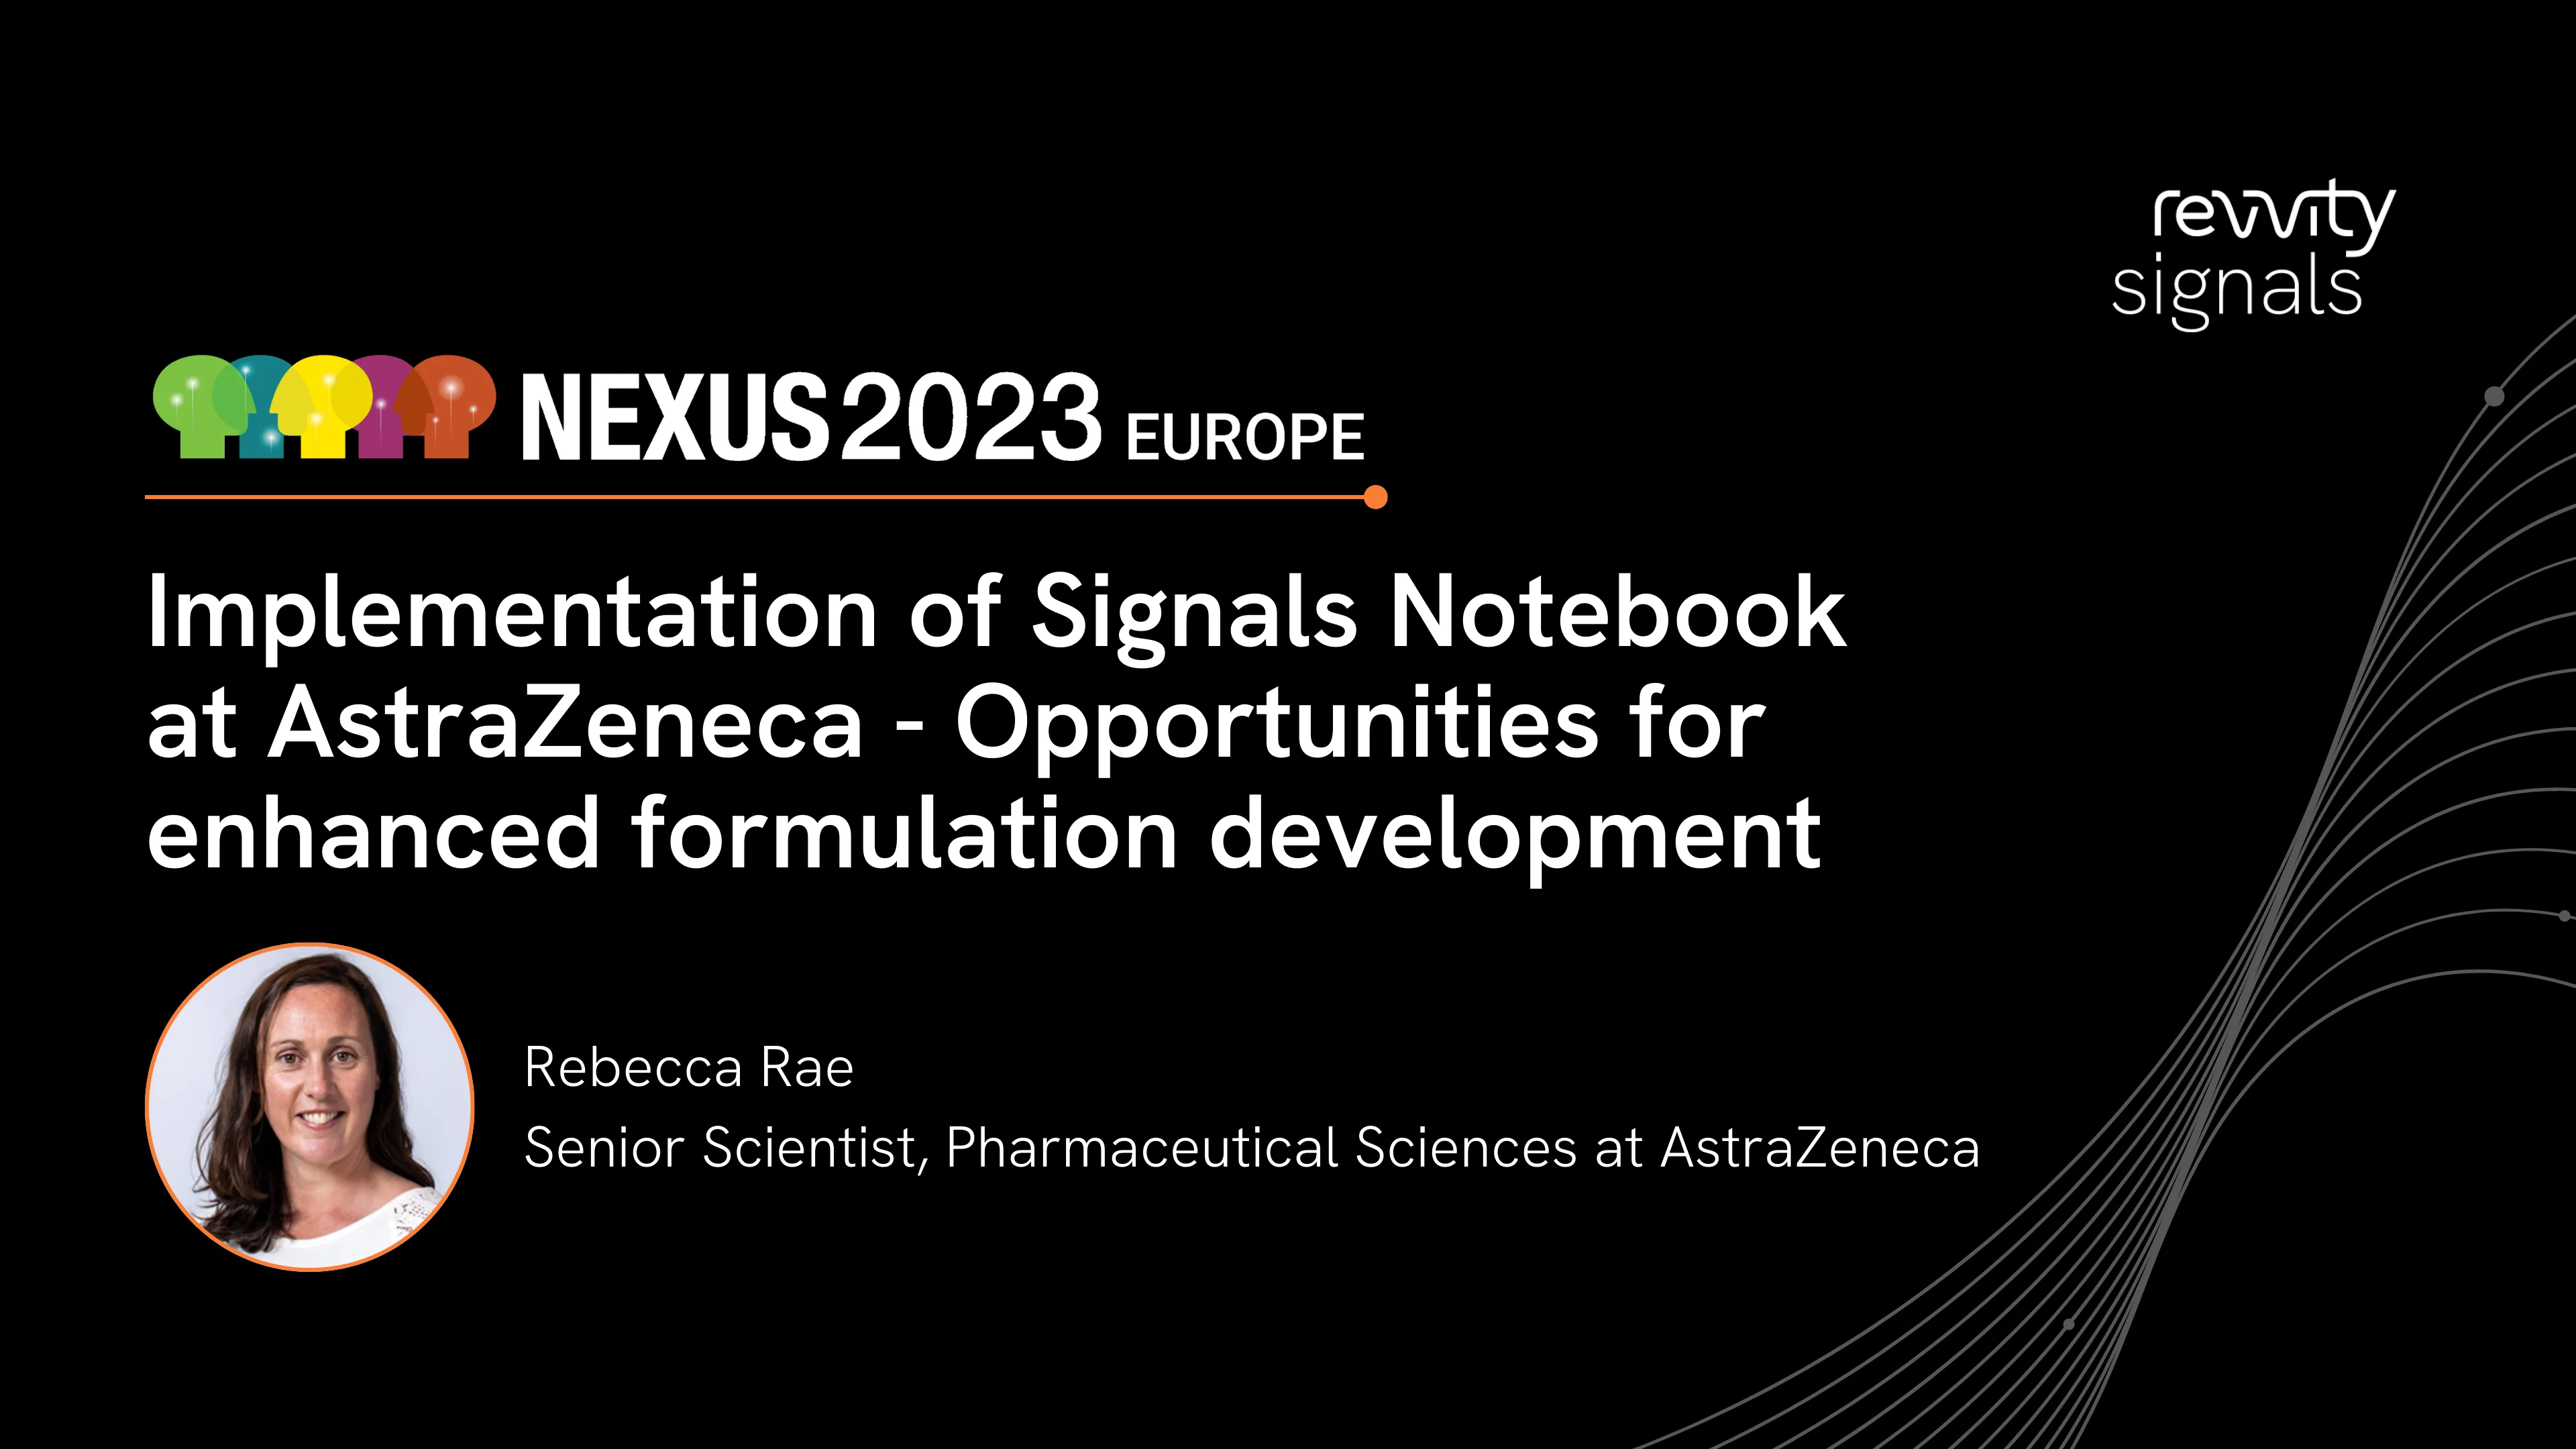 Watch Day 2, EU NEXUS 2023 - Implementation of Signals Notebook at AstraZeneca - opportunities for enhanced formulation development on Vimeo.